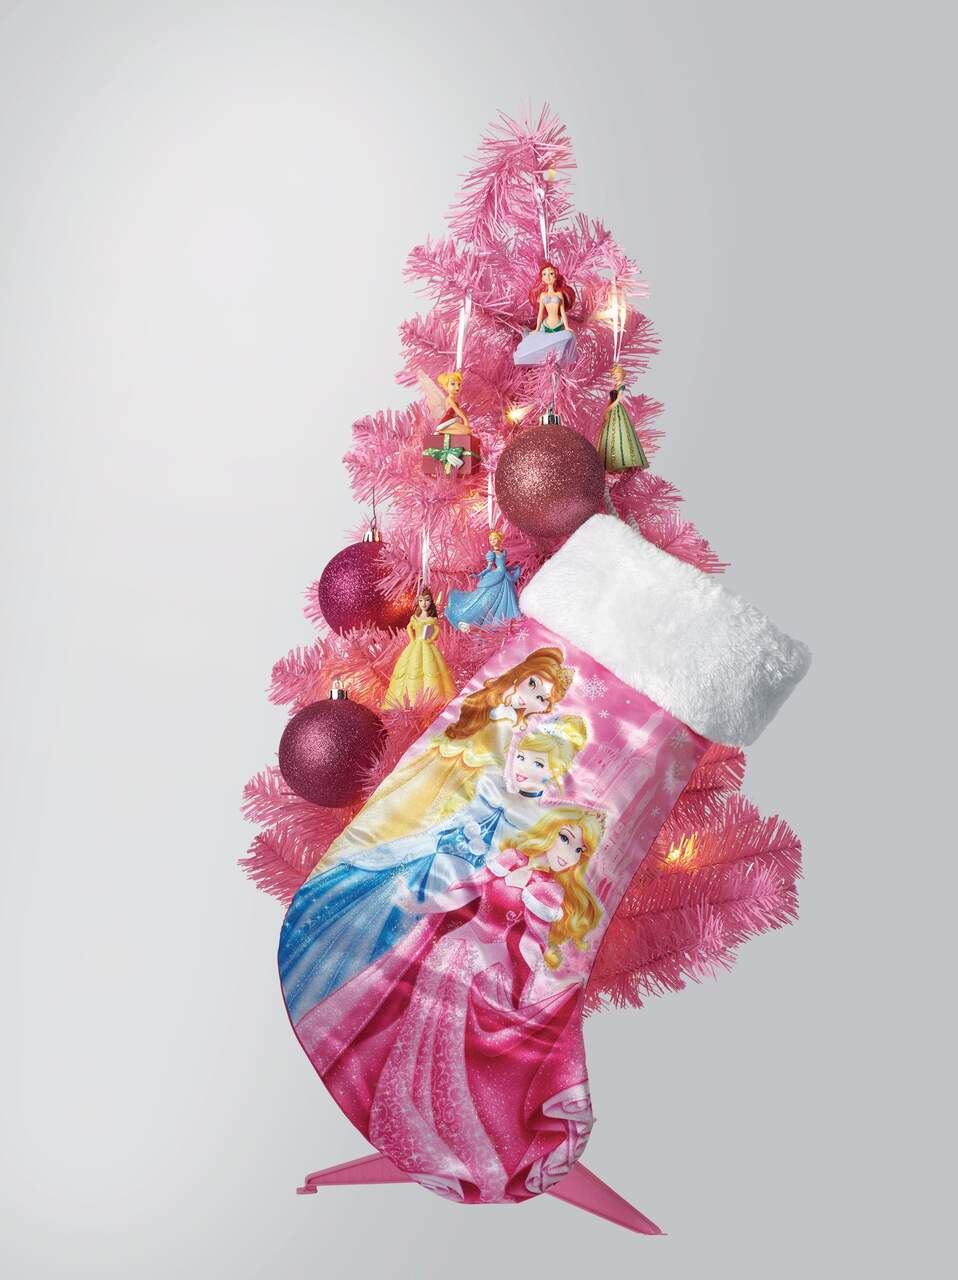 Sapin de noël mural lumineux rose – Le rêve de Noël